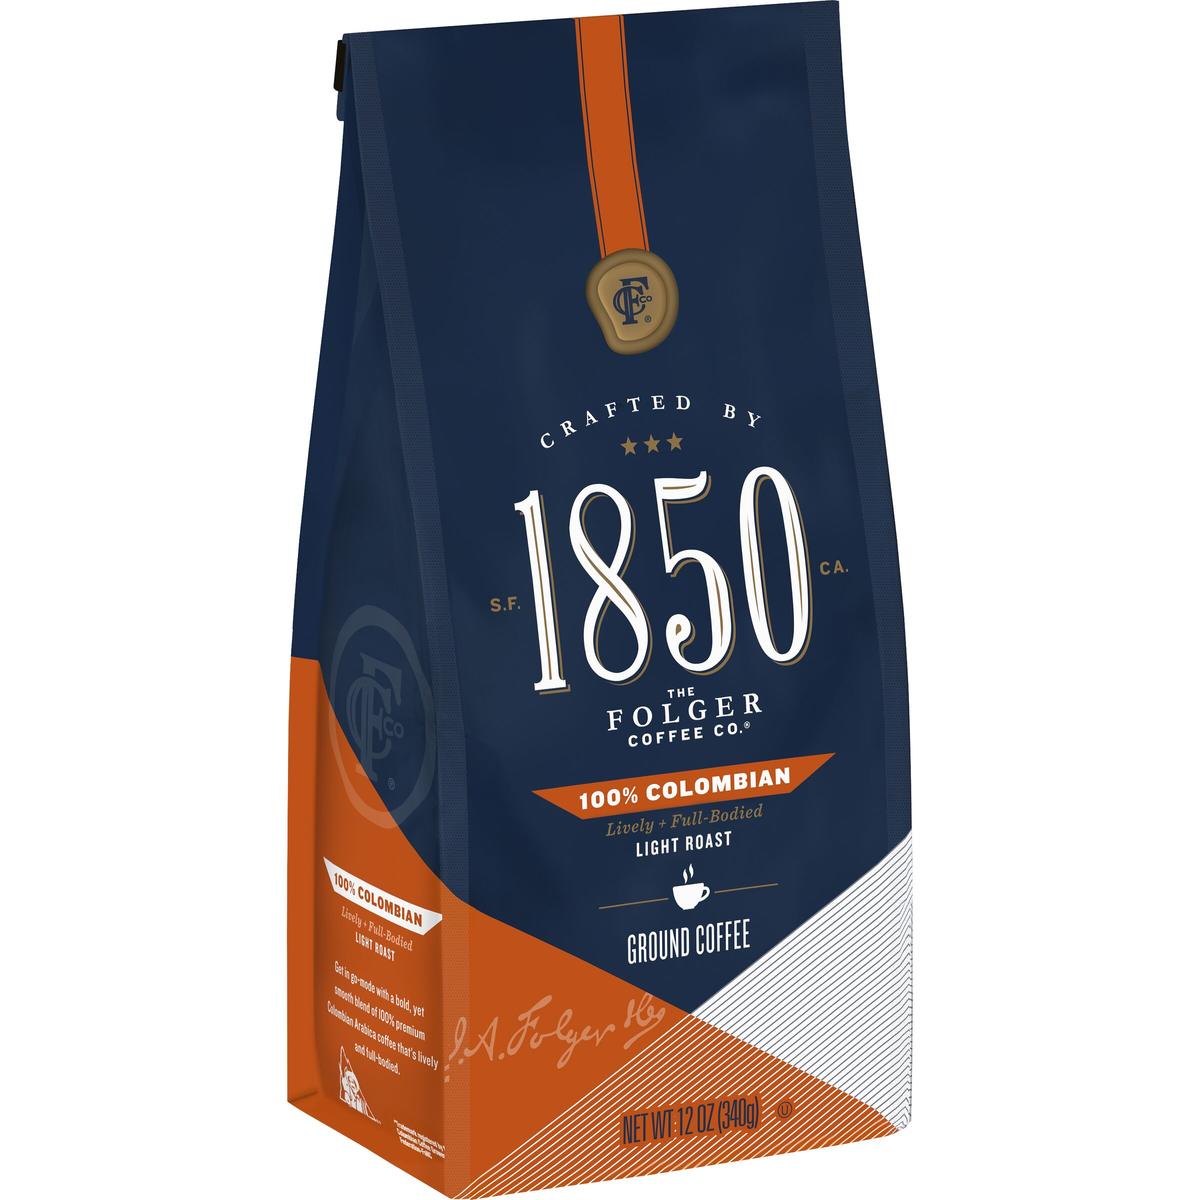 1850 Coffee Colombian Ground coffee